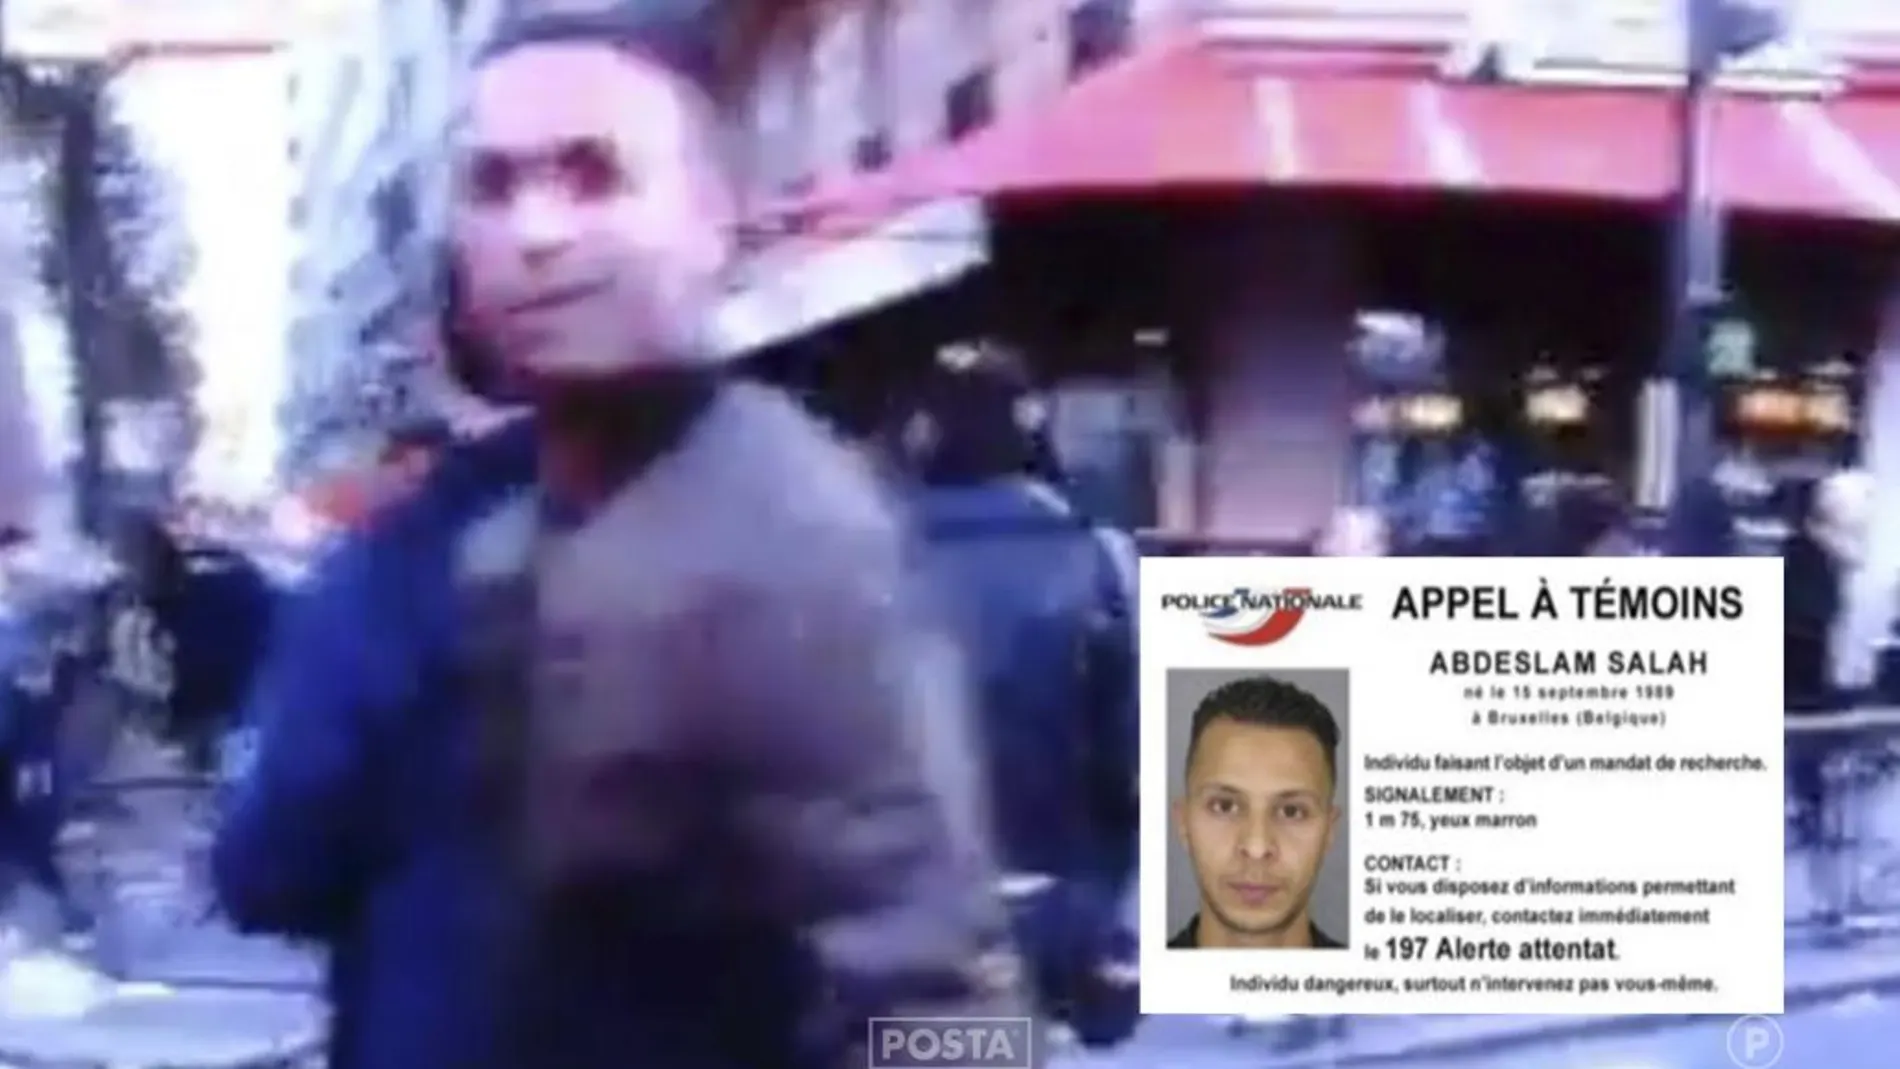 Imagen de Salah Abdeslam momentos antes de los atentados terroristas de París